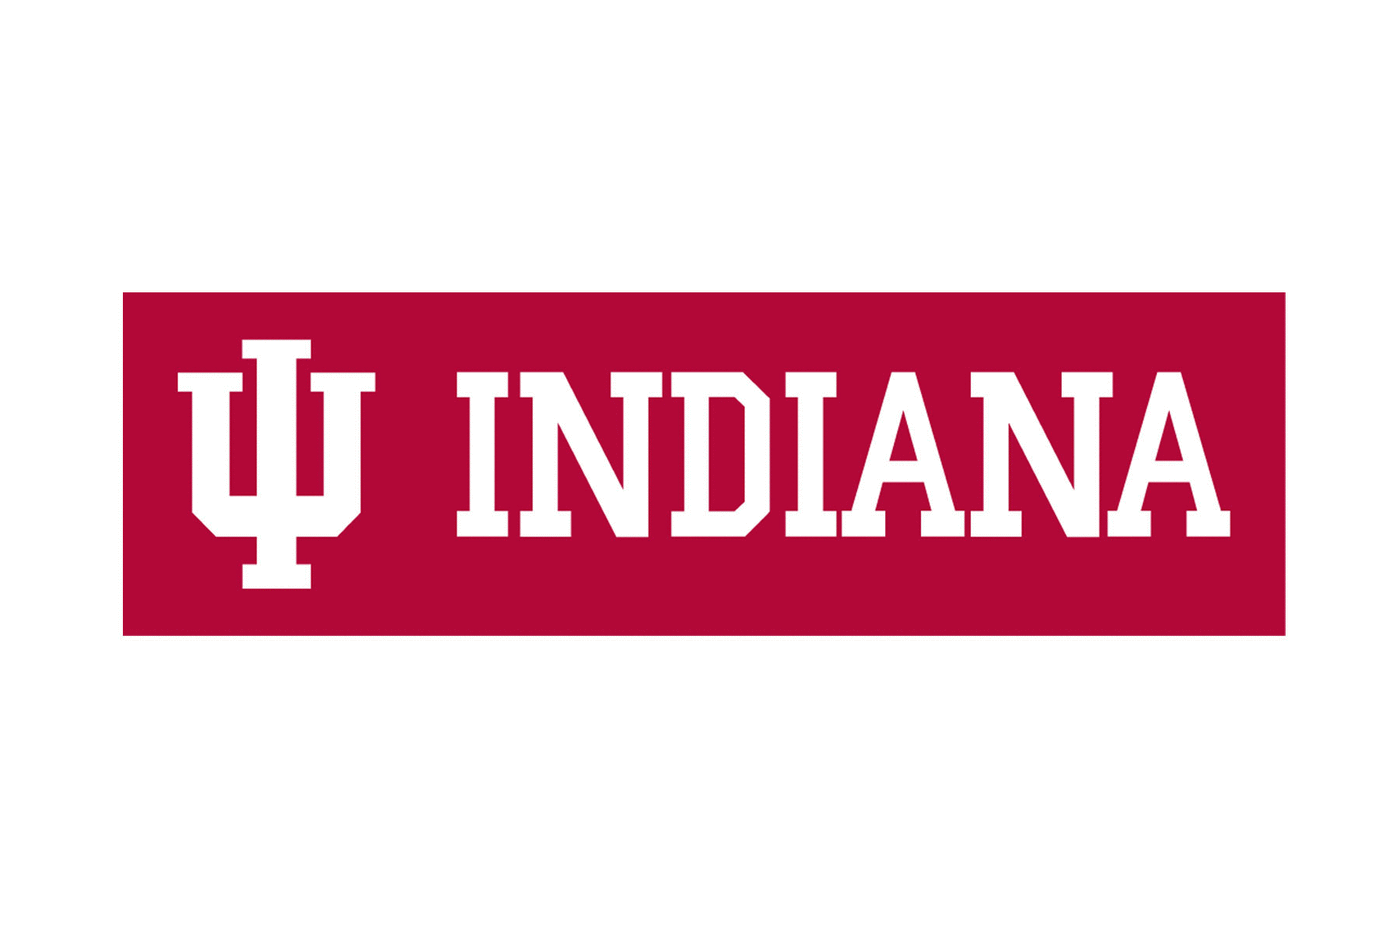 Indiana Hoosiers Football Helmet